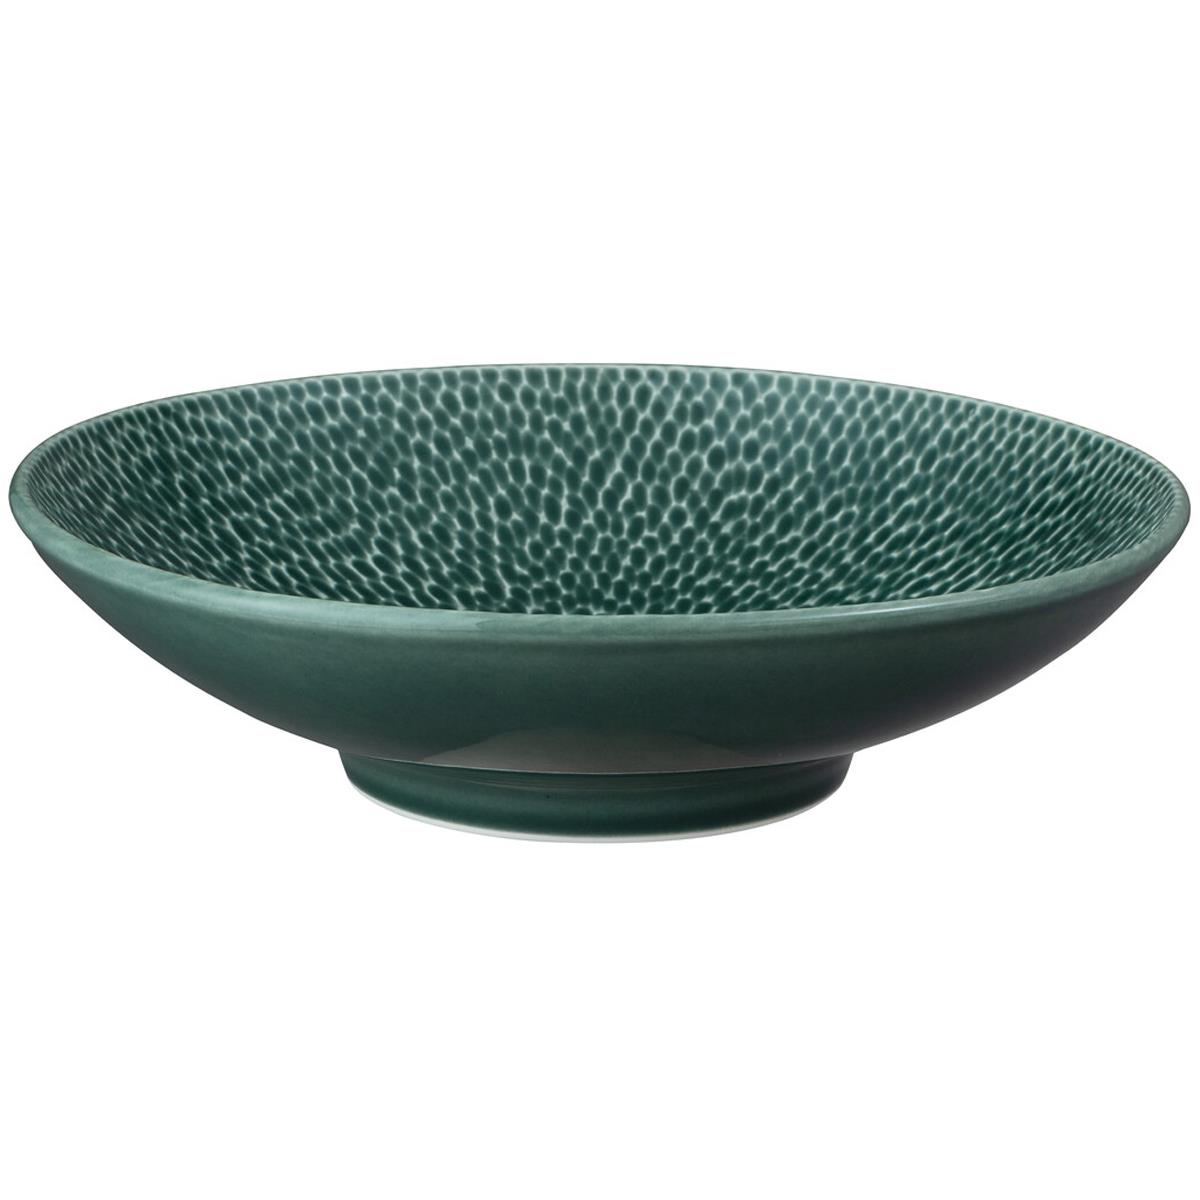 Denby Porcelain Carve Green Pasta Bowl Questions & Answers